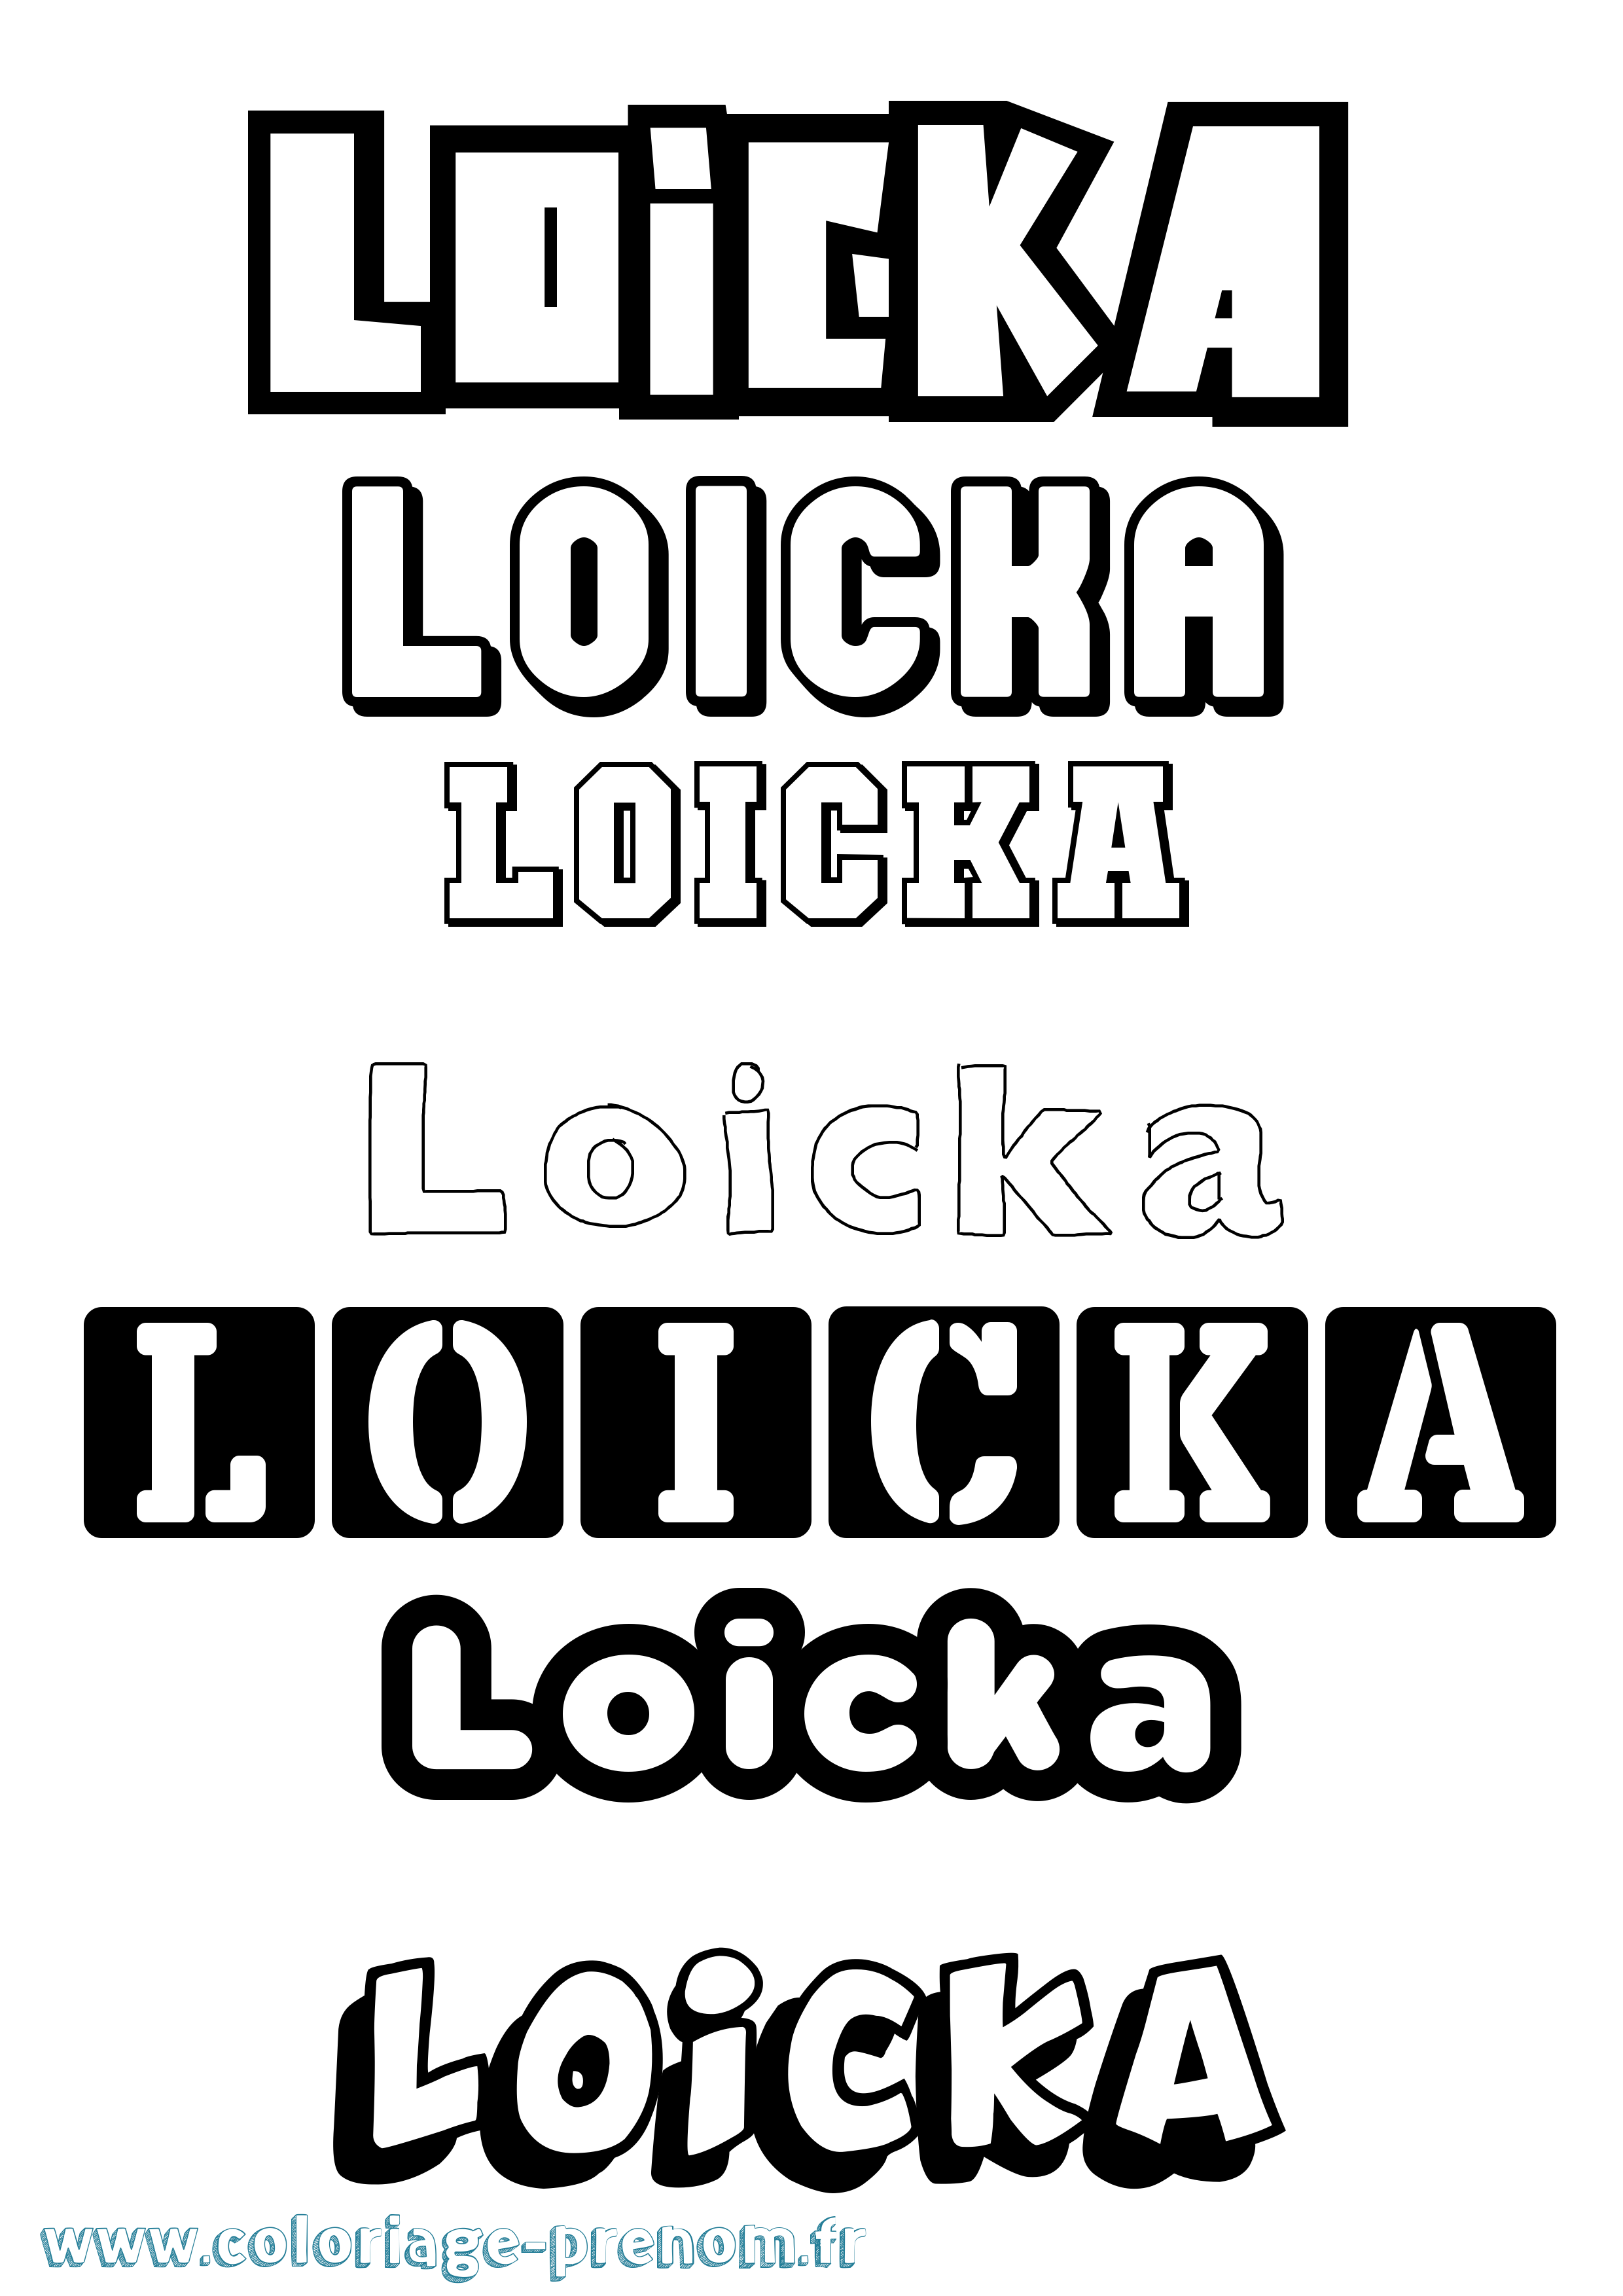 Coloriage prénom Loicka Simple